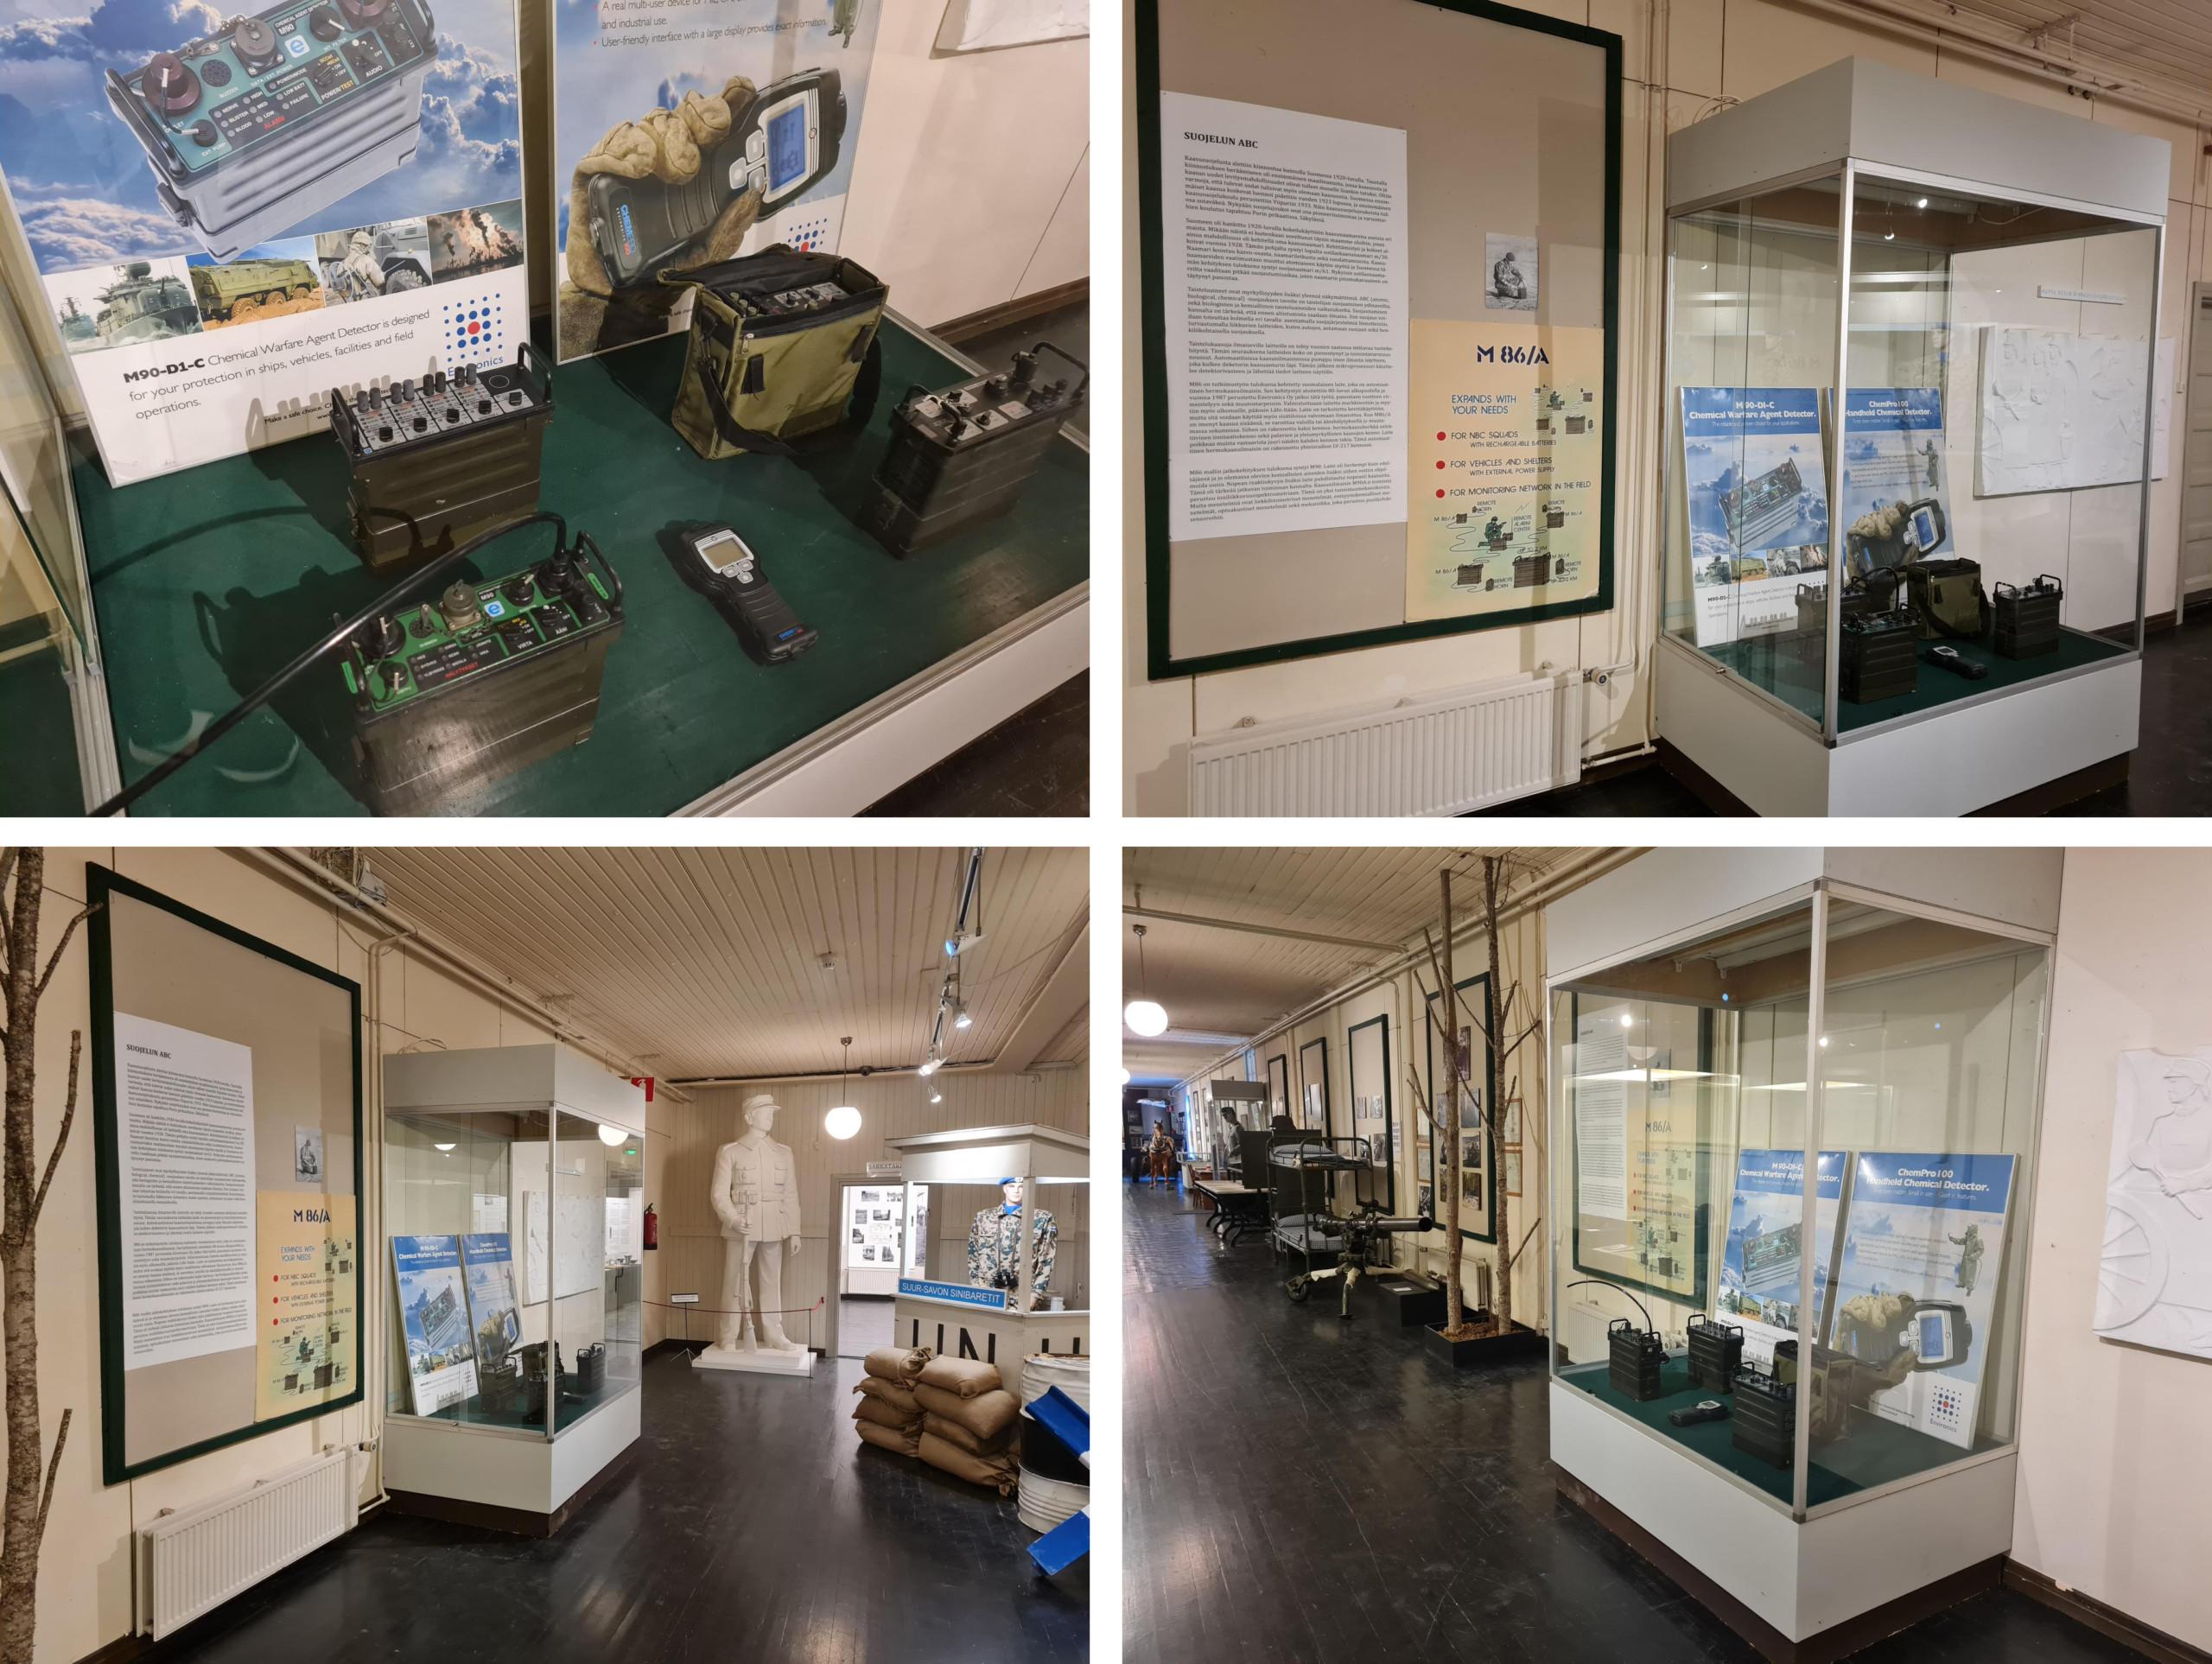 Environics chemical detectors featured in Mikkeli Infantry Museum ABC training exhibition